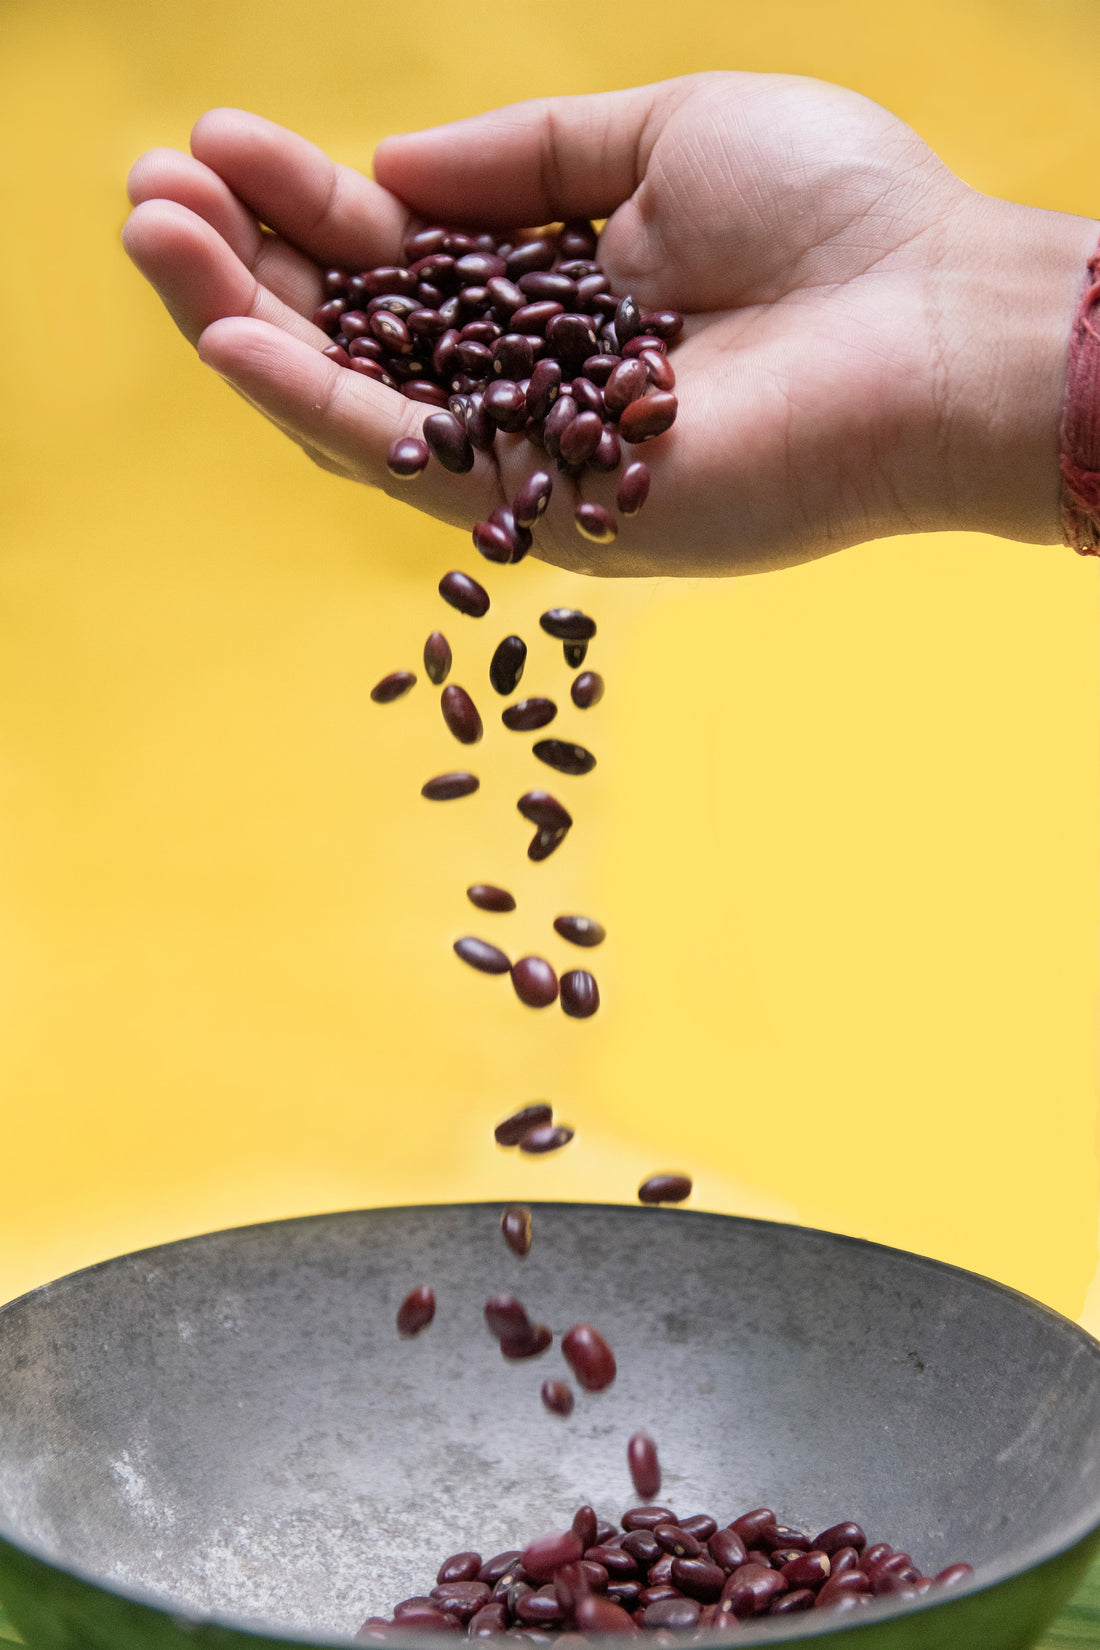 Are Black Beans Suitable for Diabetes?